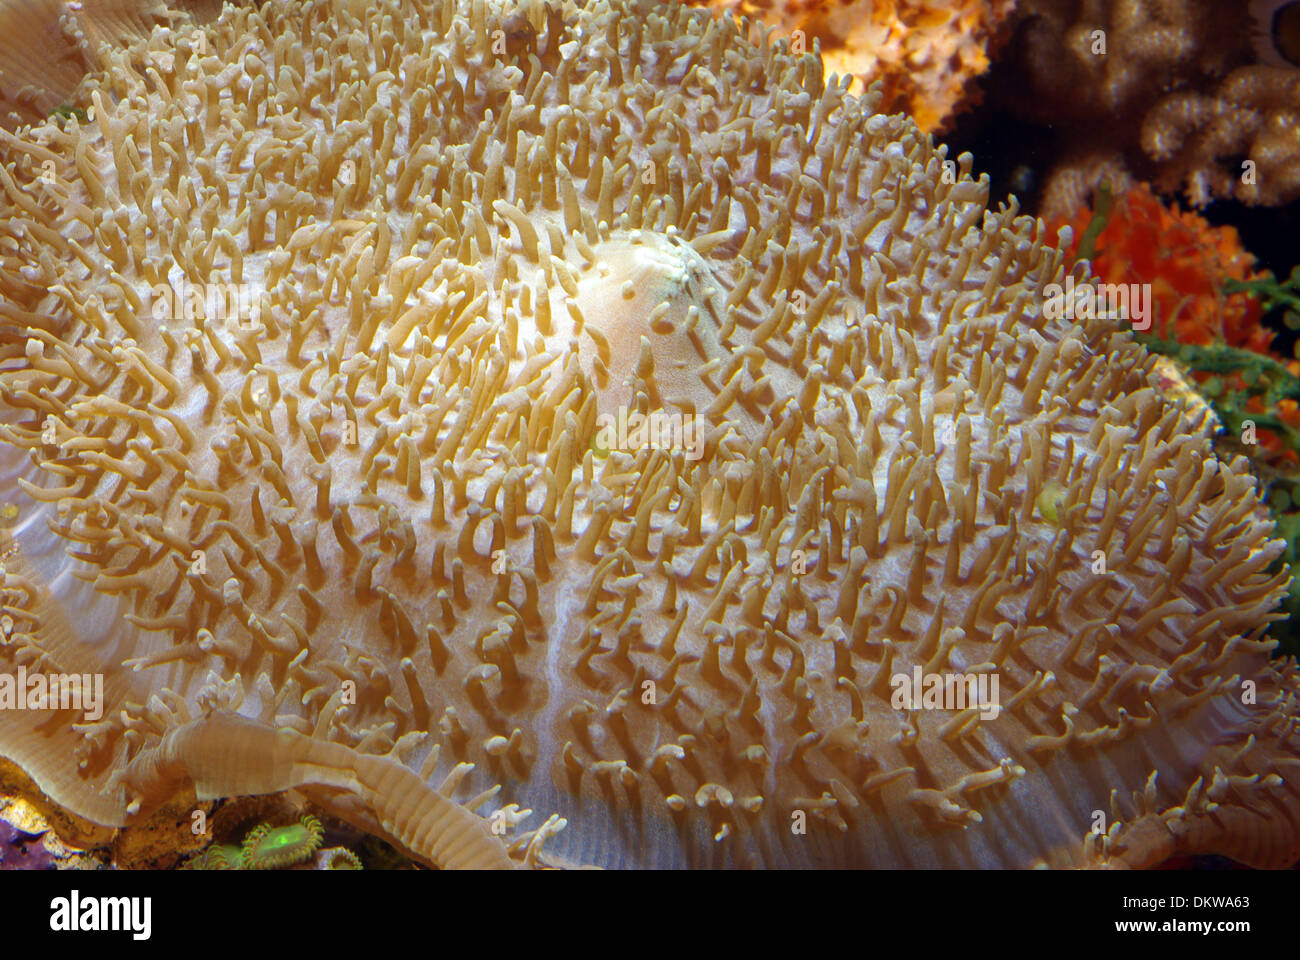 Elephant ear coral (Rhodactis sp.) Stock Photo